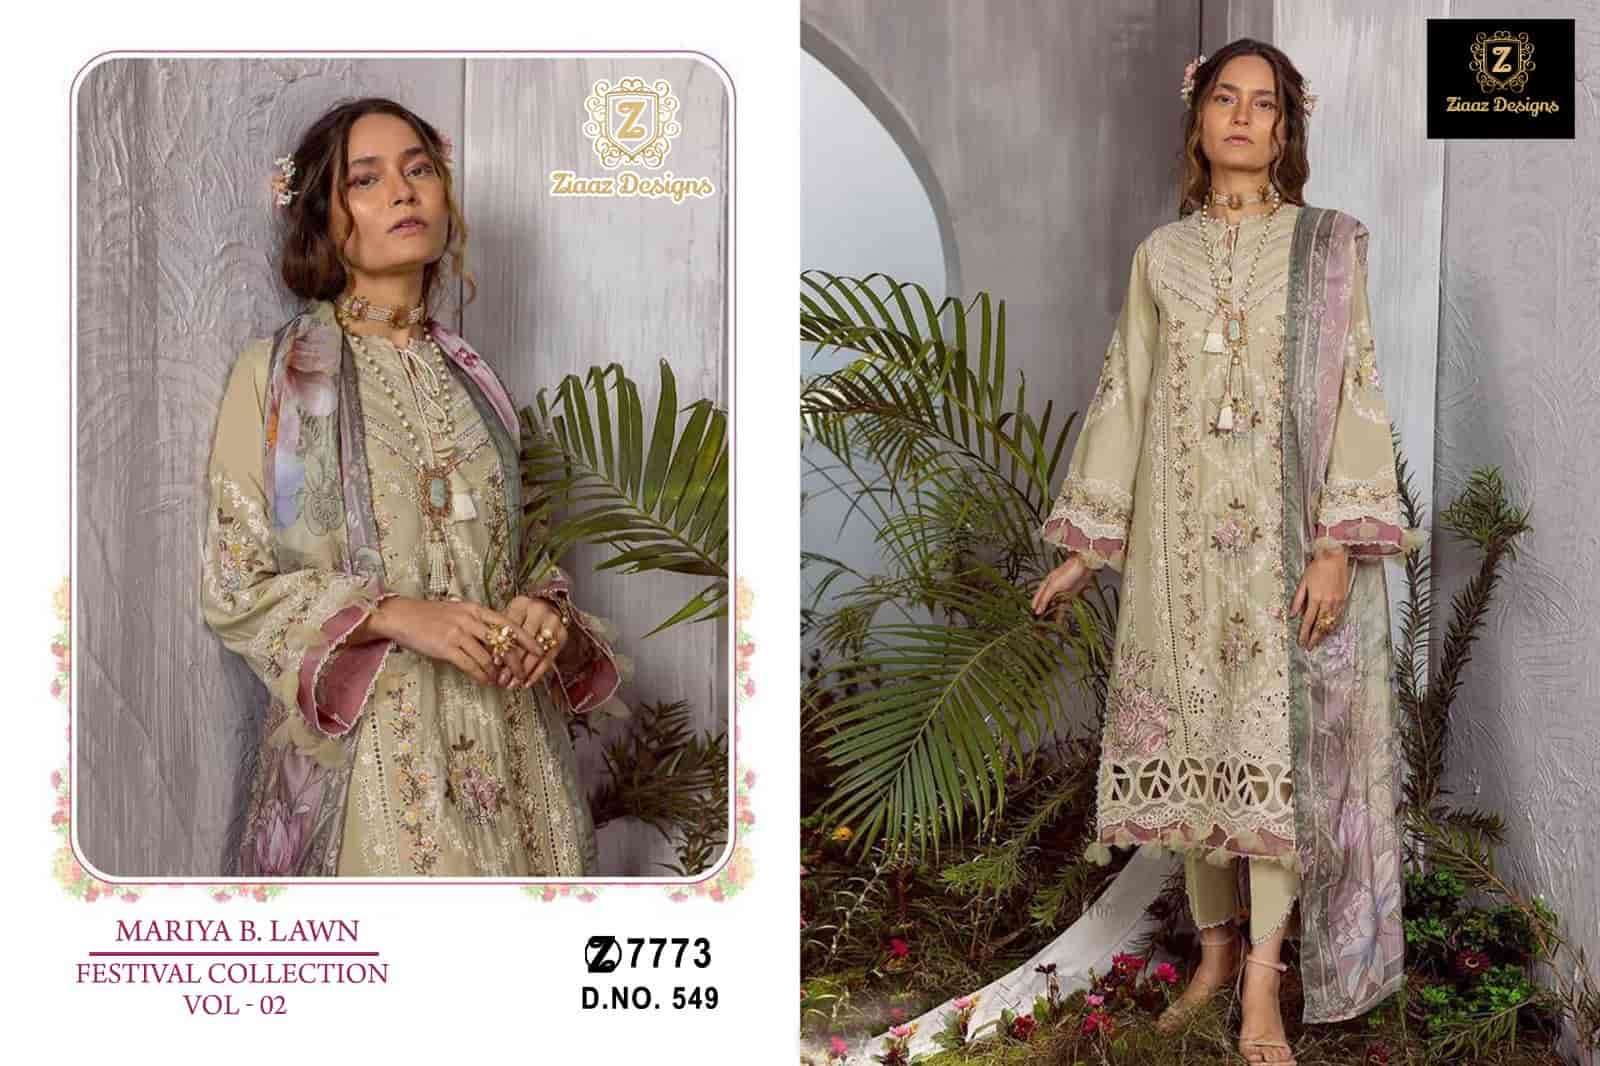 Ziaaz Designs 549 Fancy Latest Designer Cotton Embroidered Dress Exporter